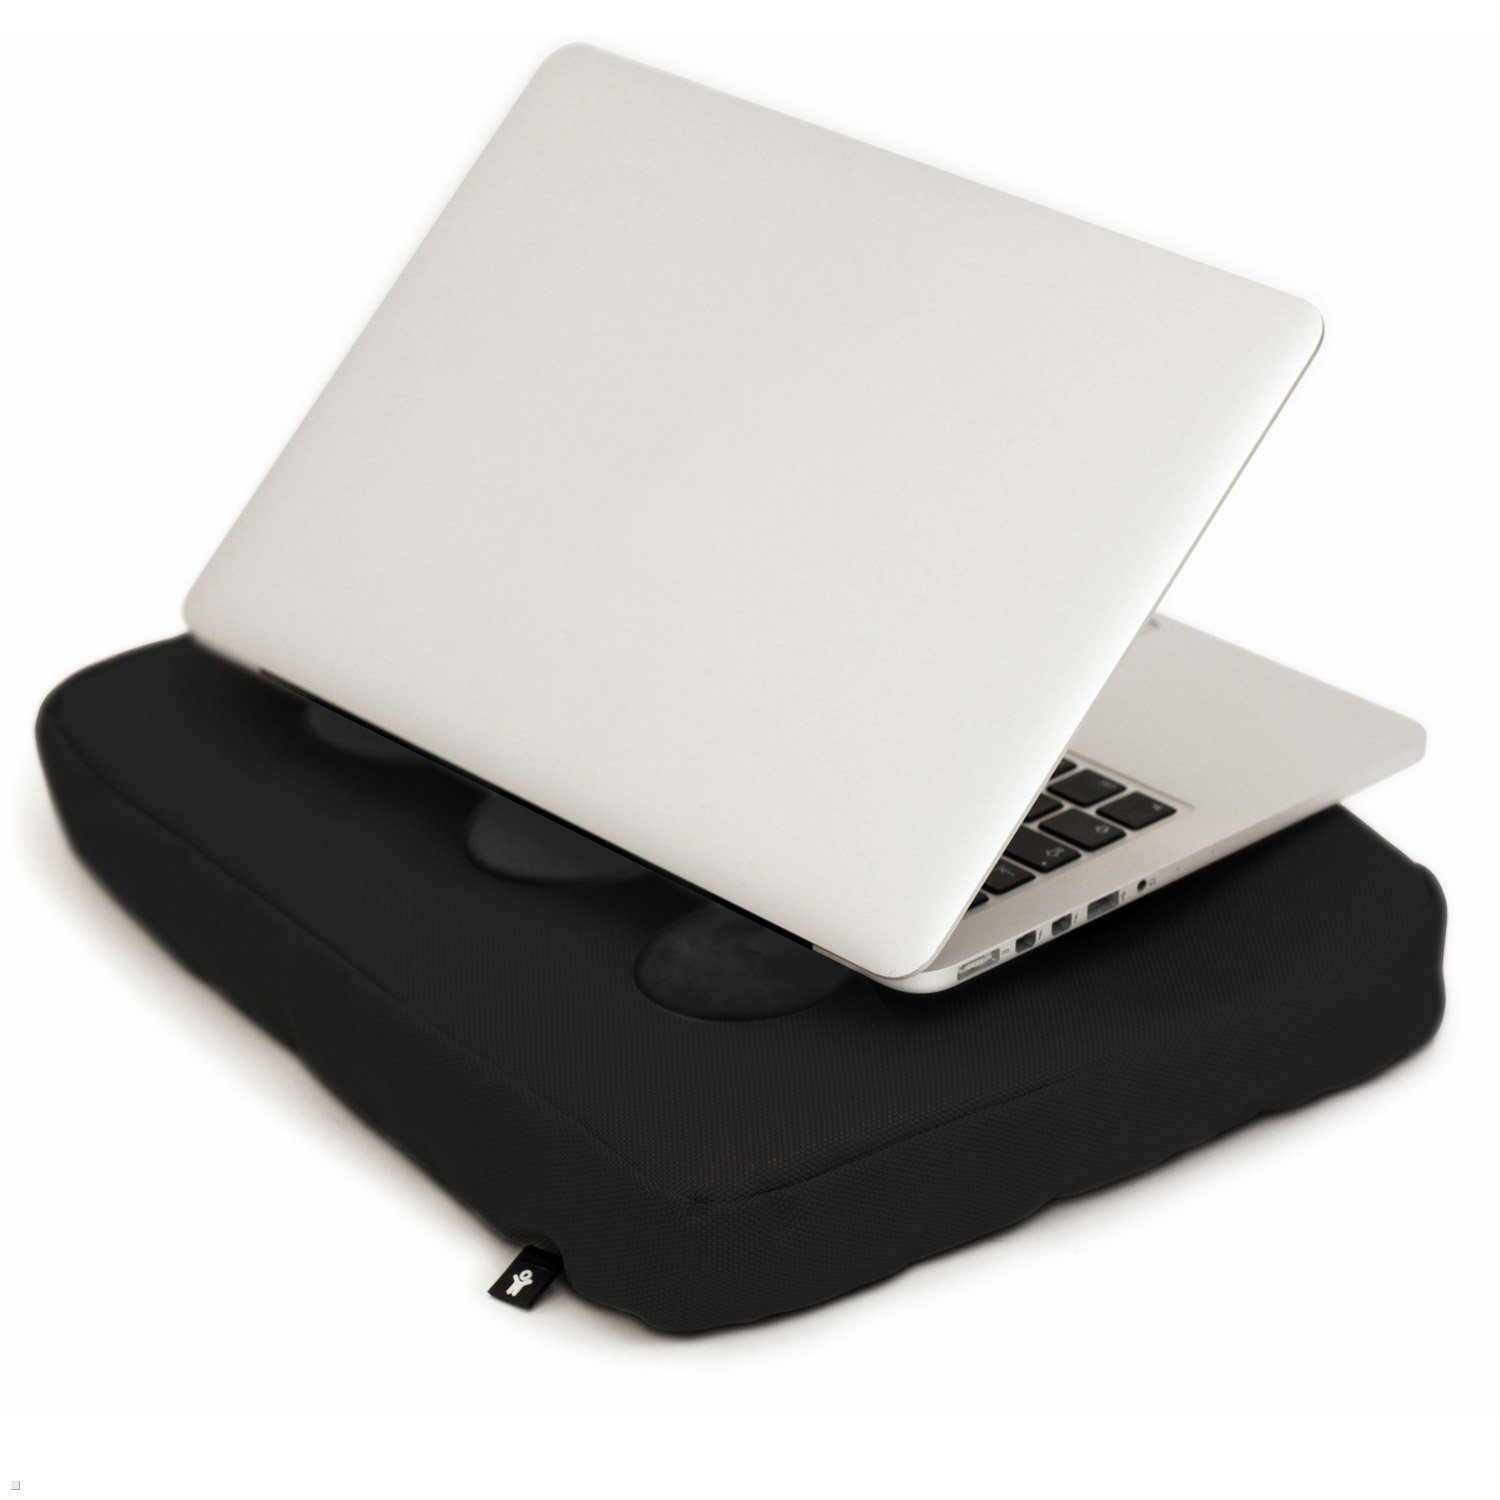 Bosign Laptop Tablett Hitech schwarz